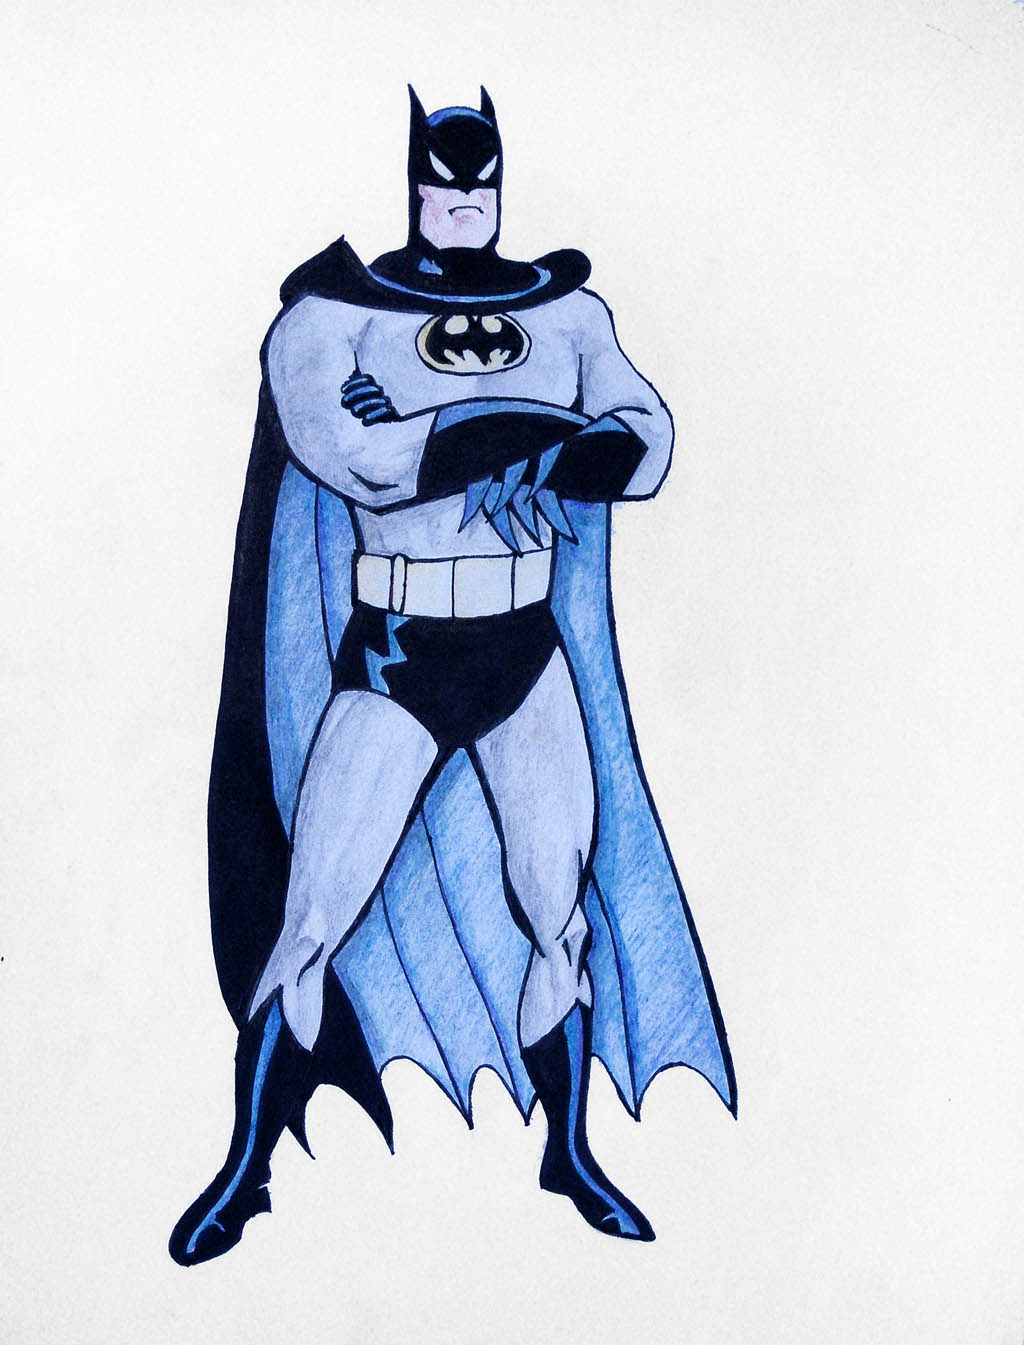 Batman Animated Series Version by jovigolf on DeviantArt